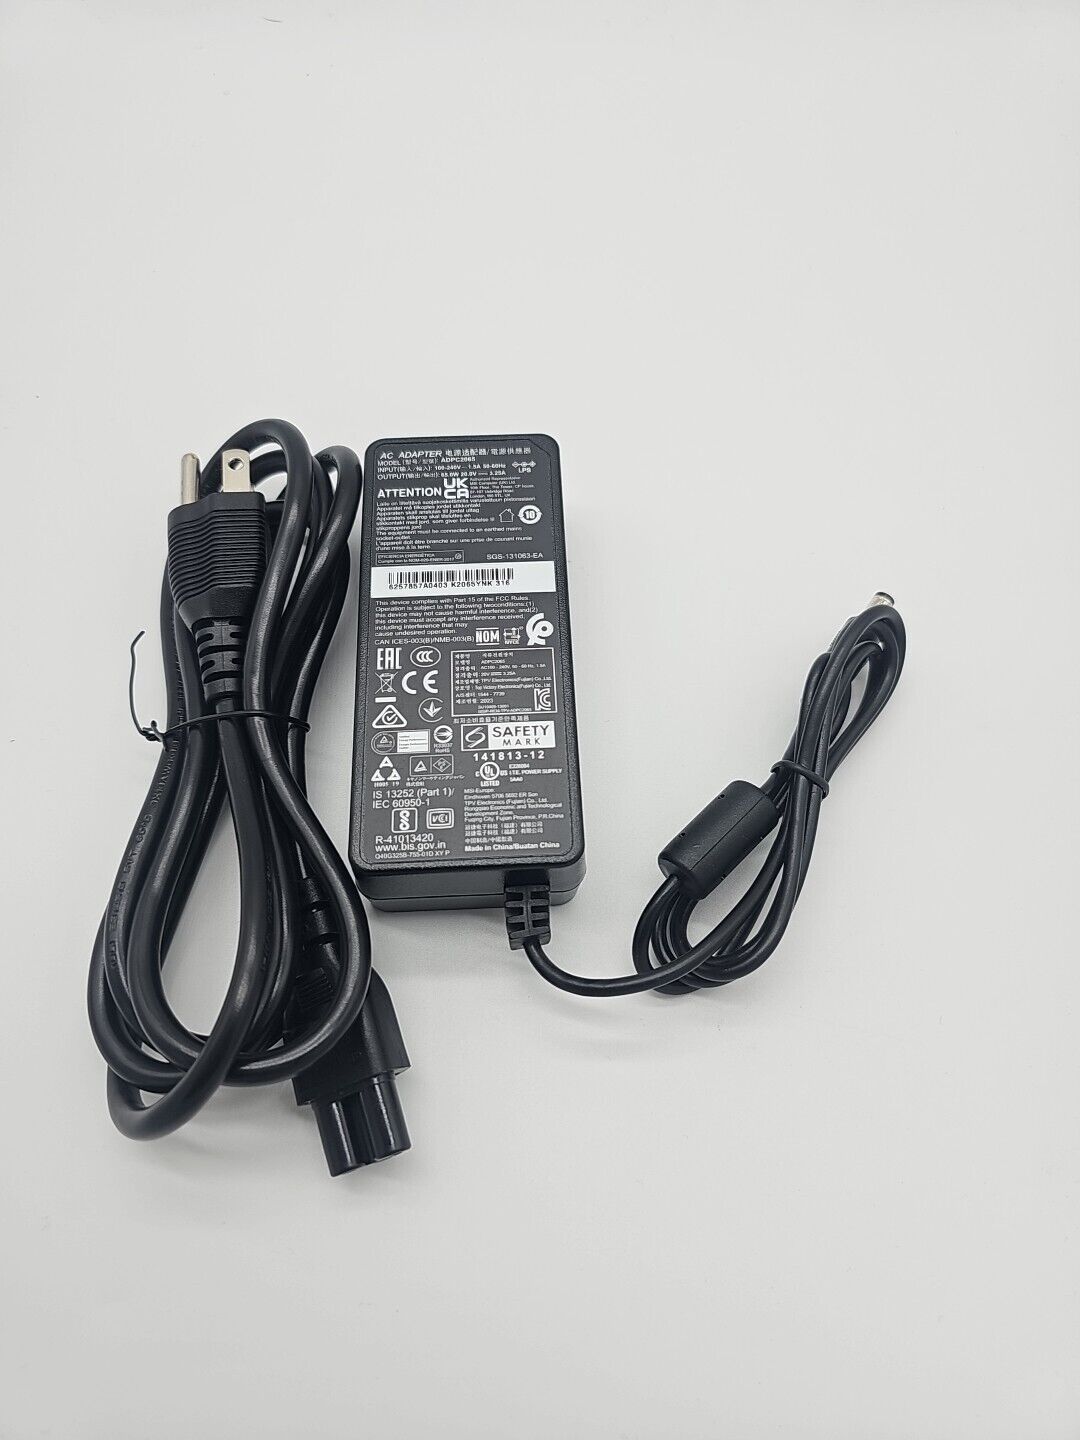 Genuine TPV AC Adapter Power Supply for MSI AOC Monitors ADPC2065 20V 3.25A 65W 